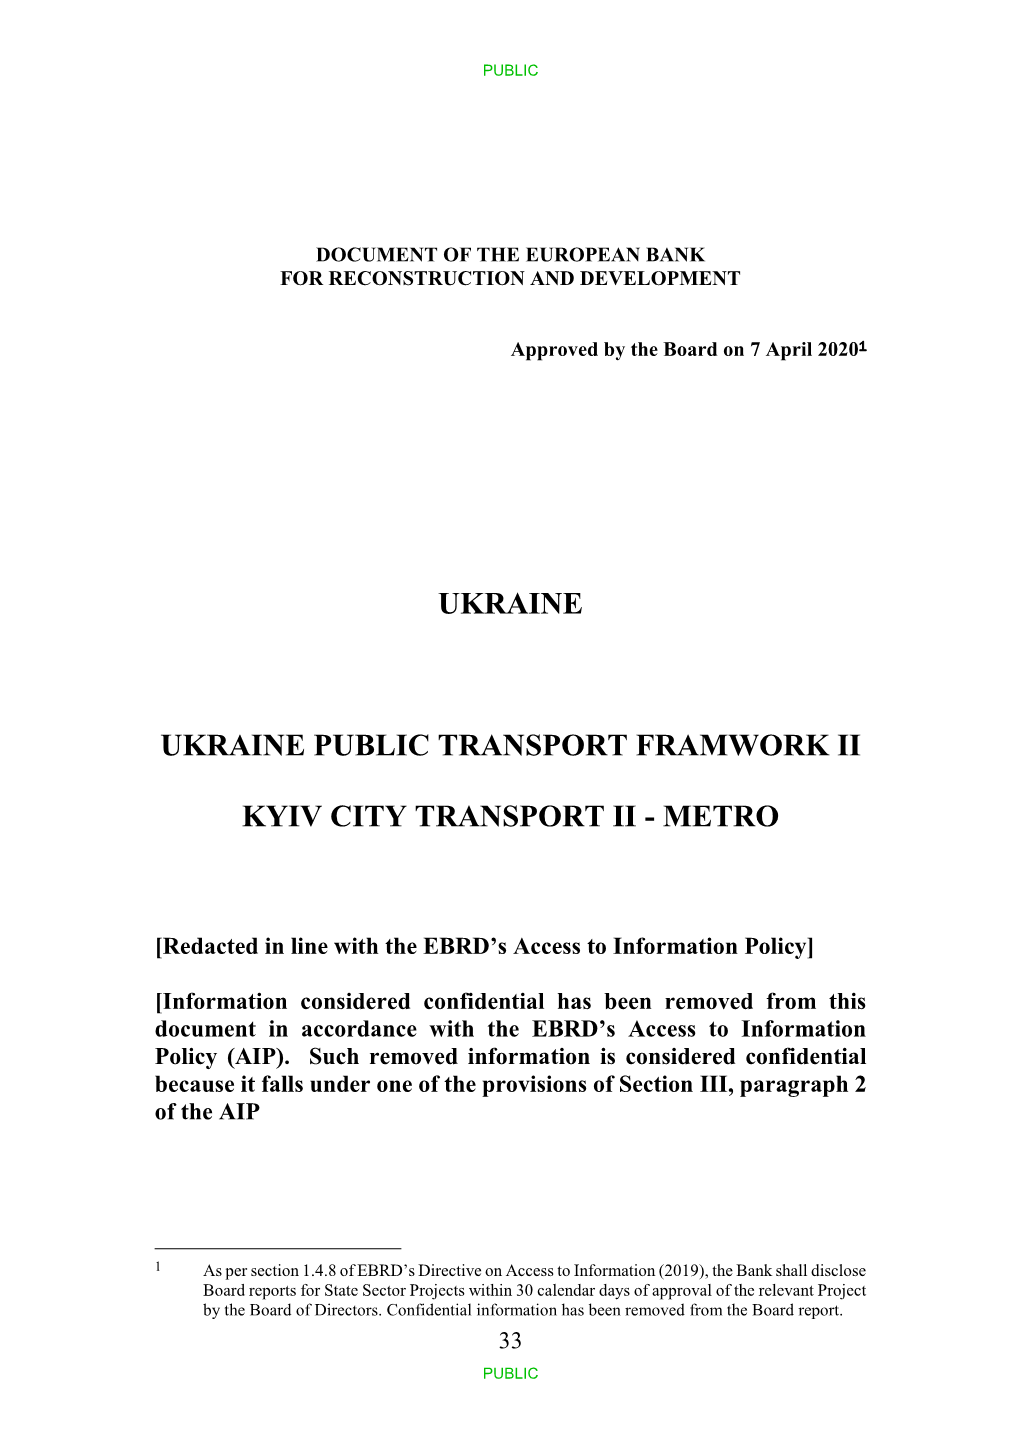 Kyiv City Transport Ii - Metro